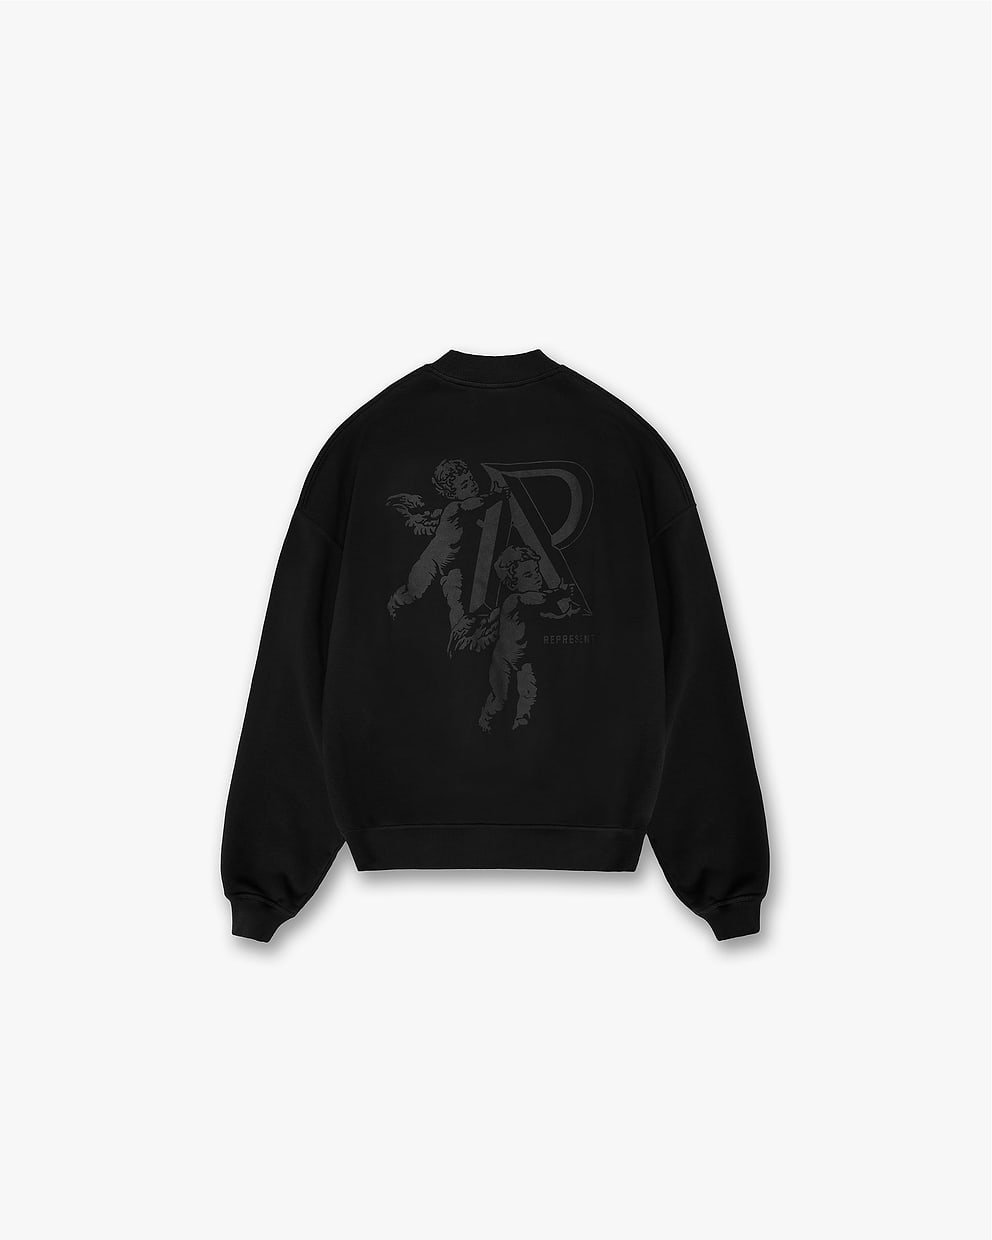 Cherub Initial Sweater - Jet Black